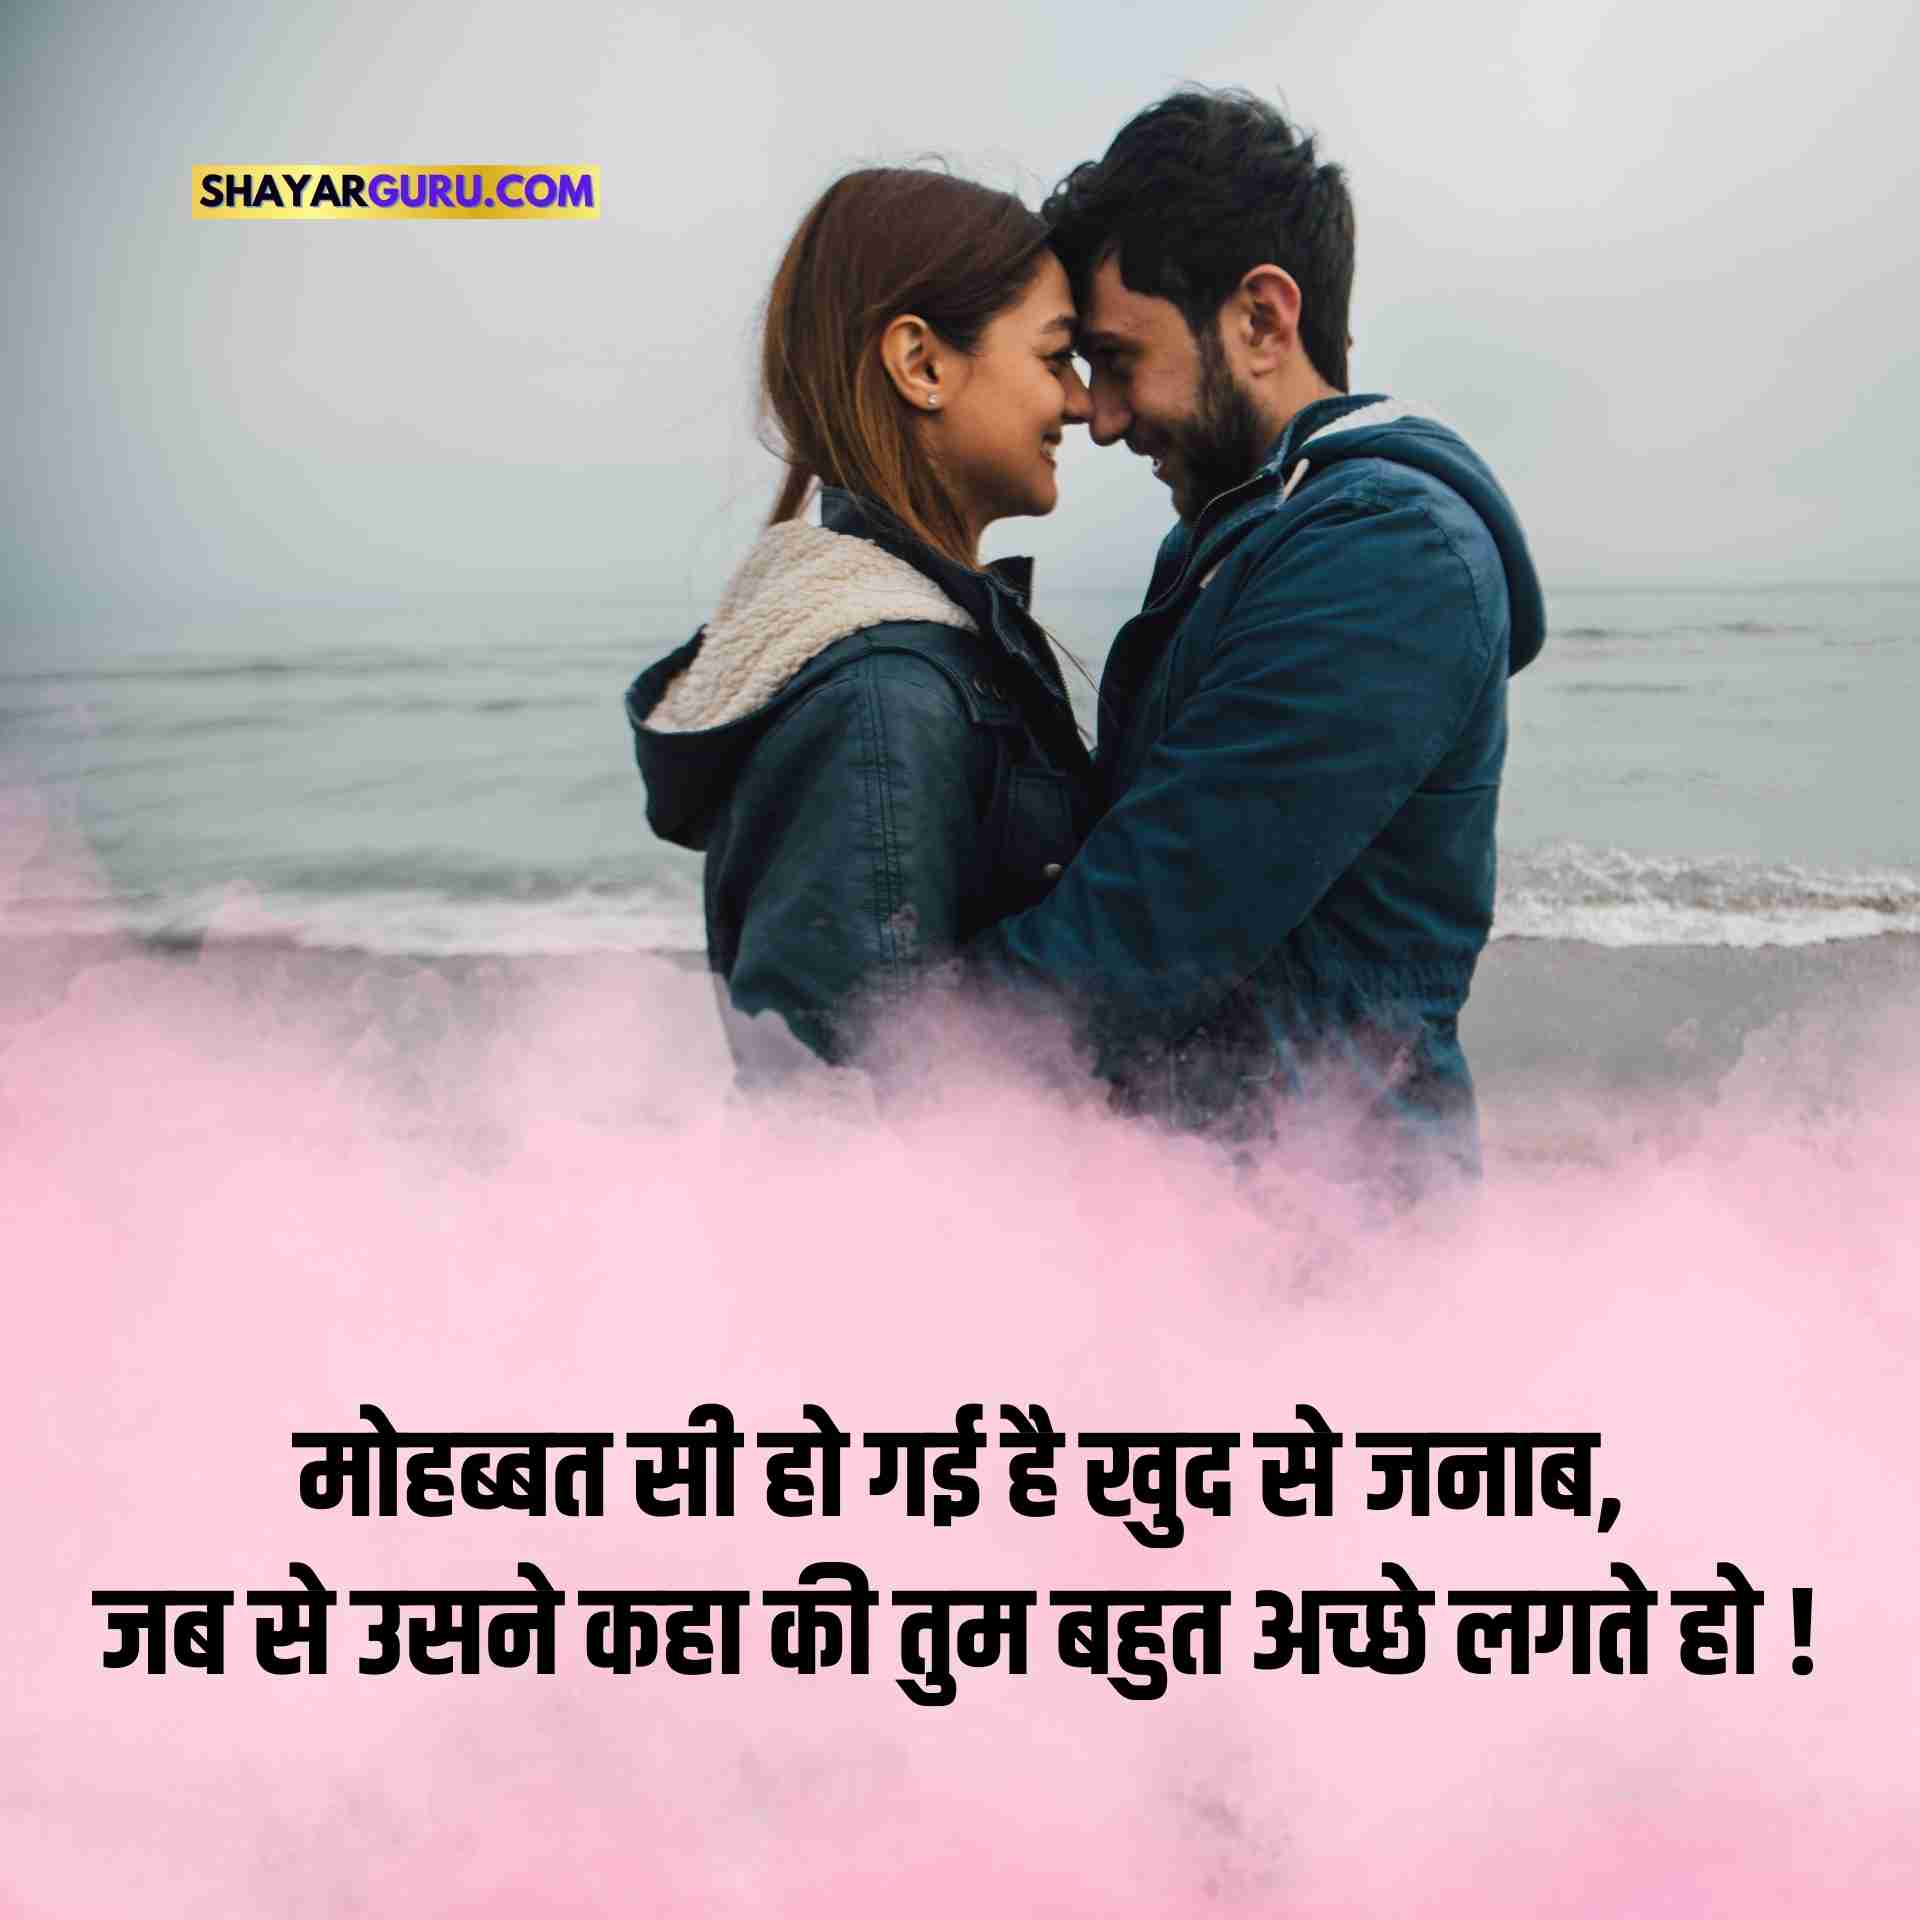 Love Shayari in Hindi Image